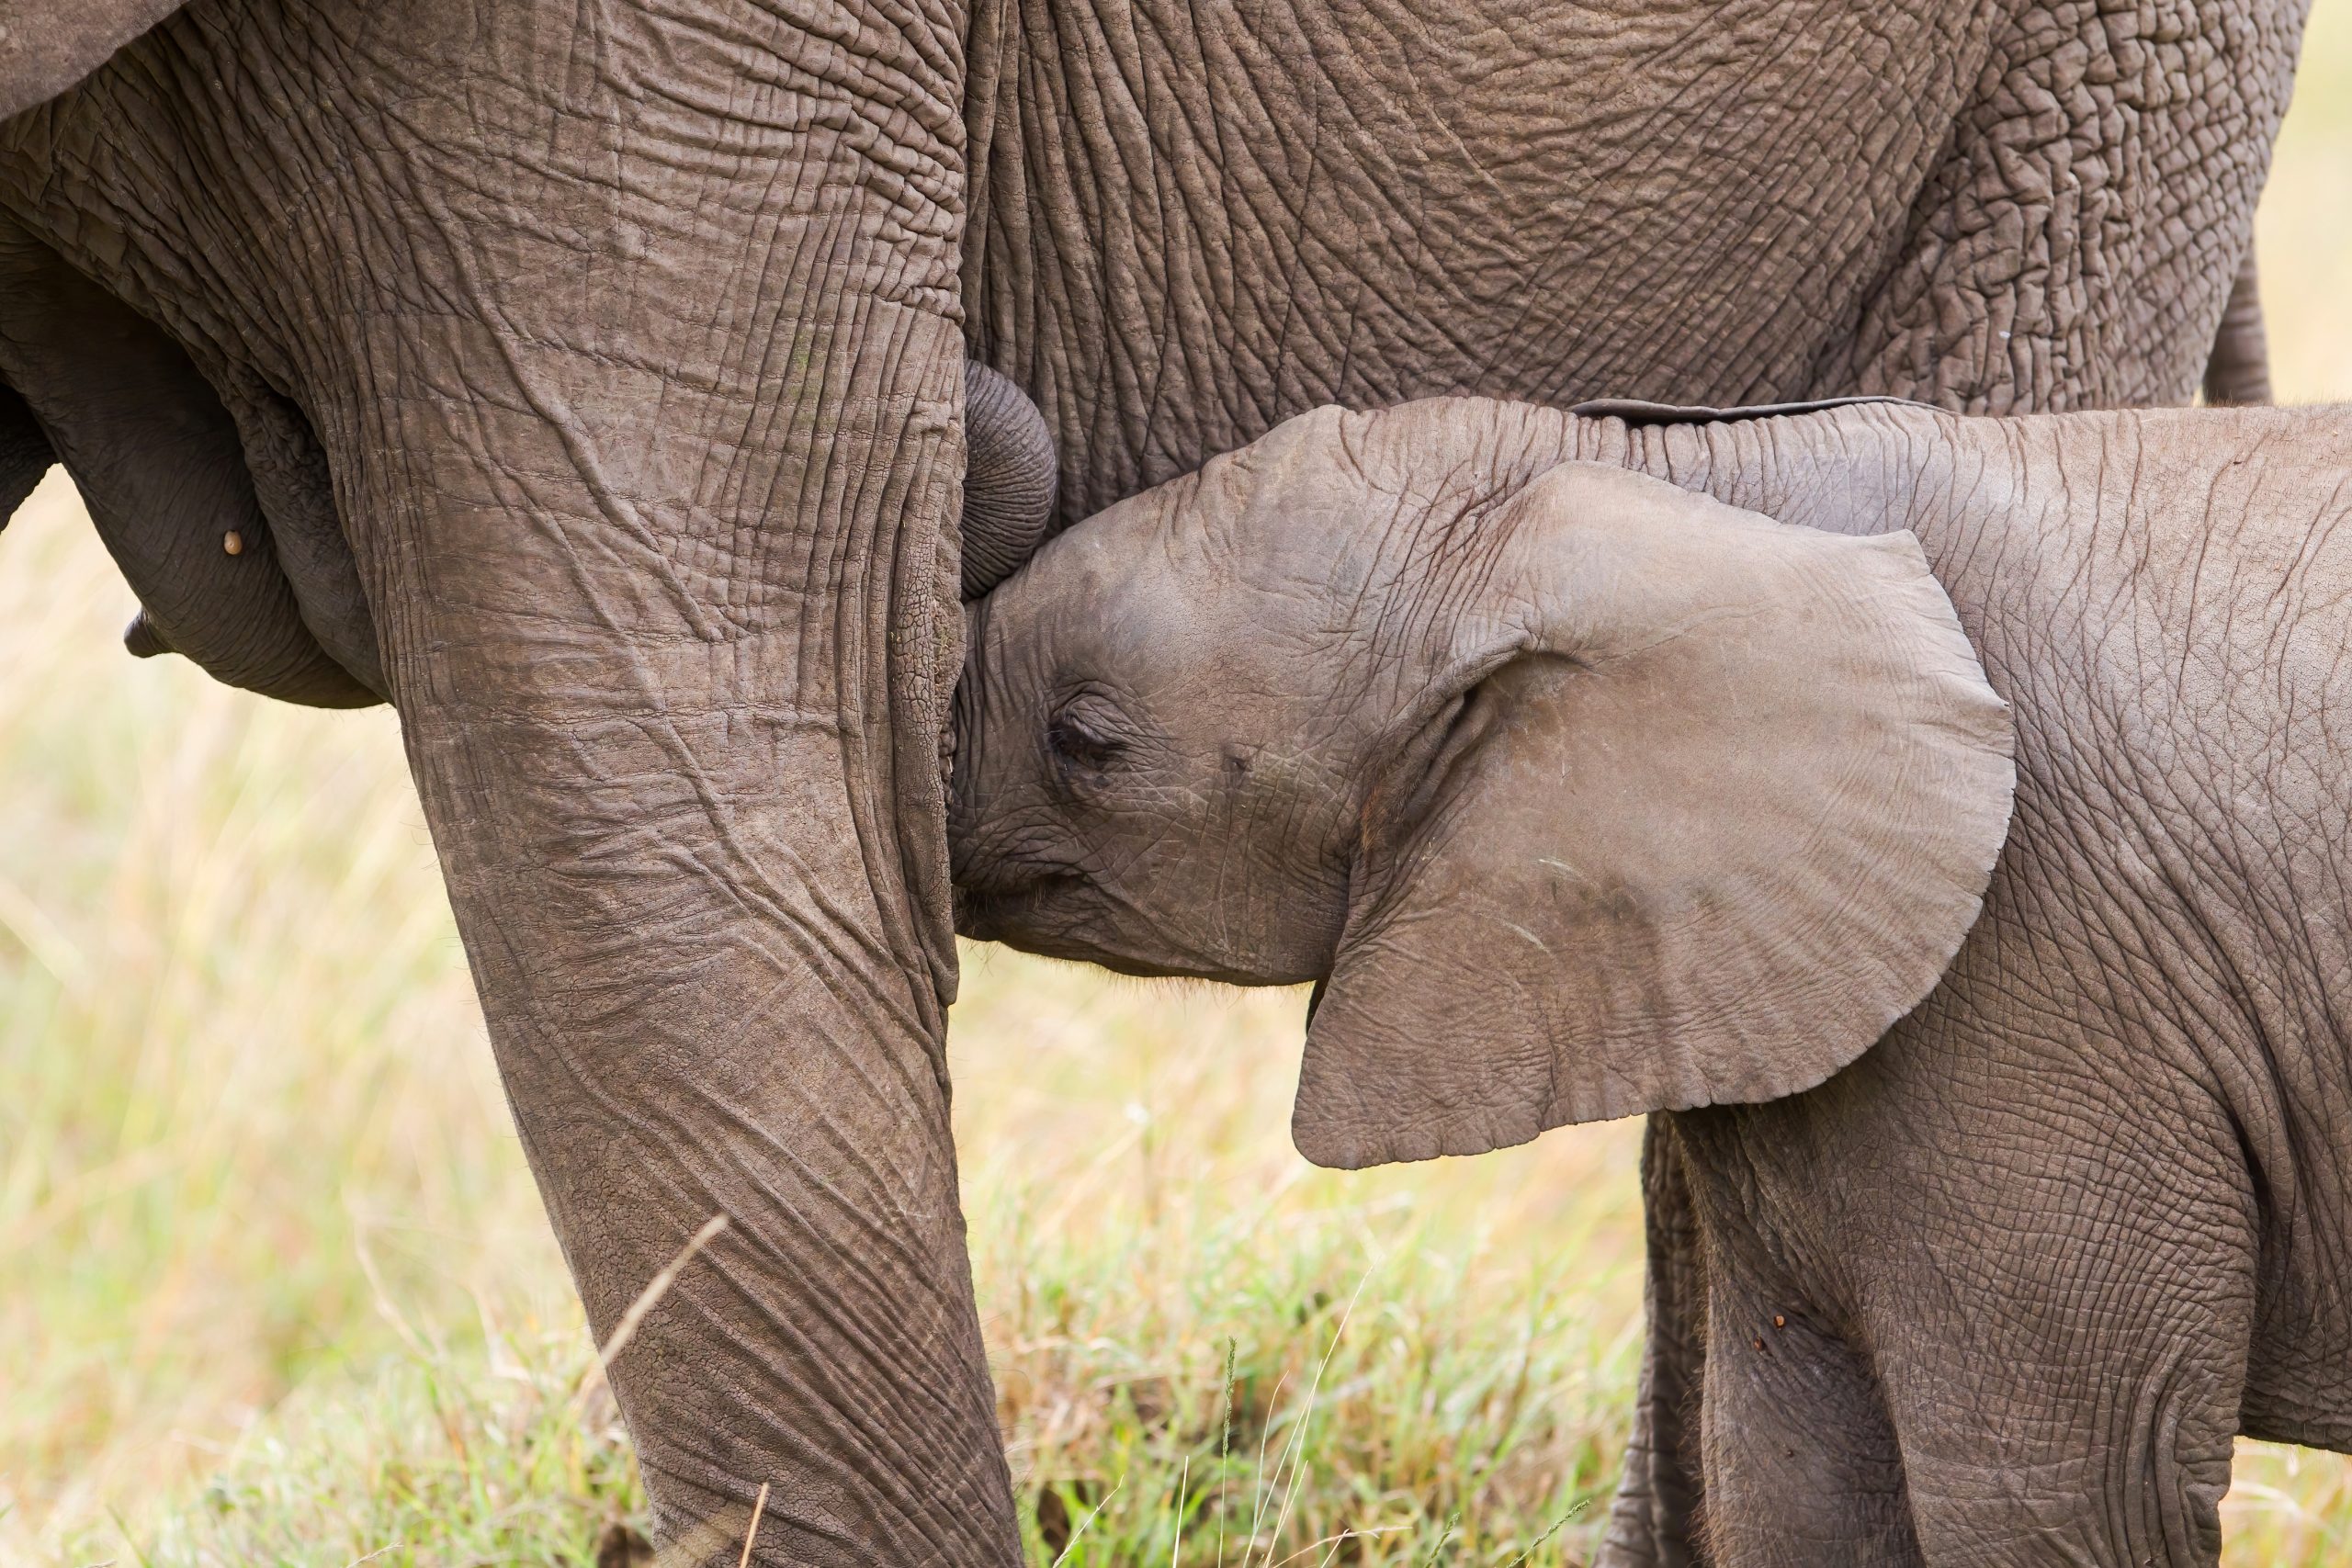 Adult elephant and baby elephant